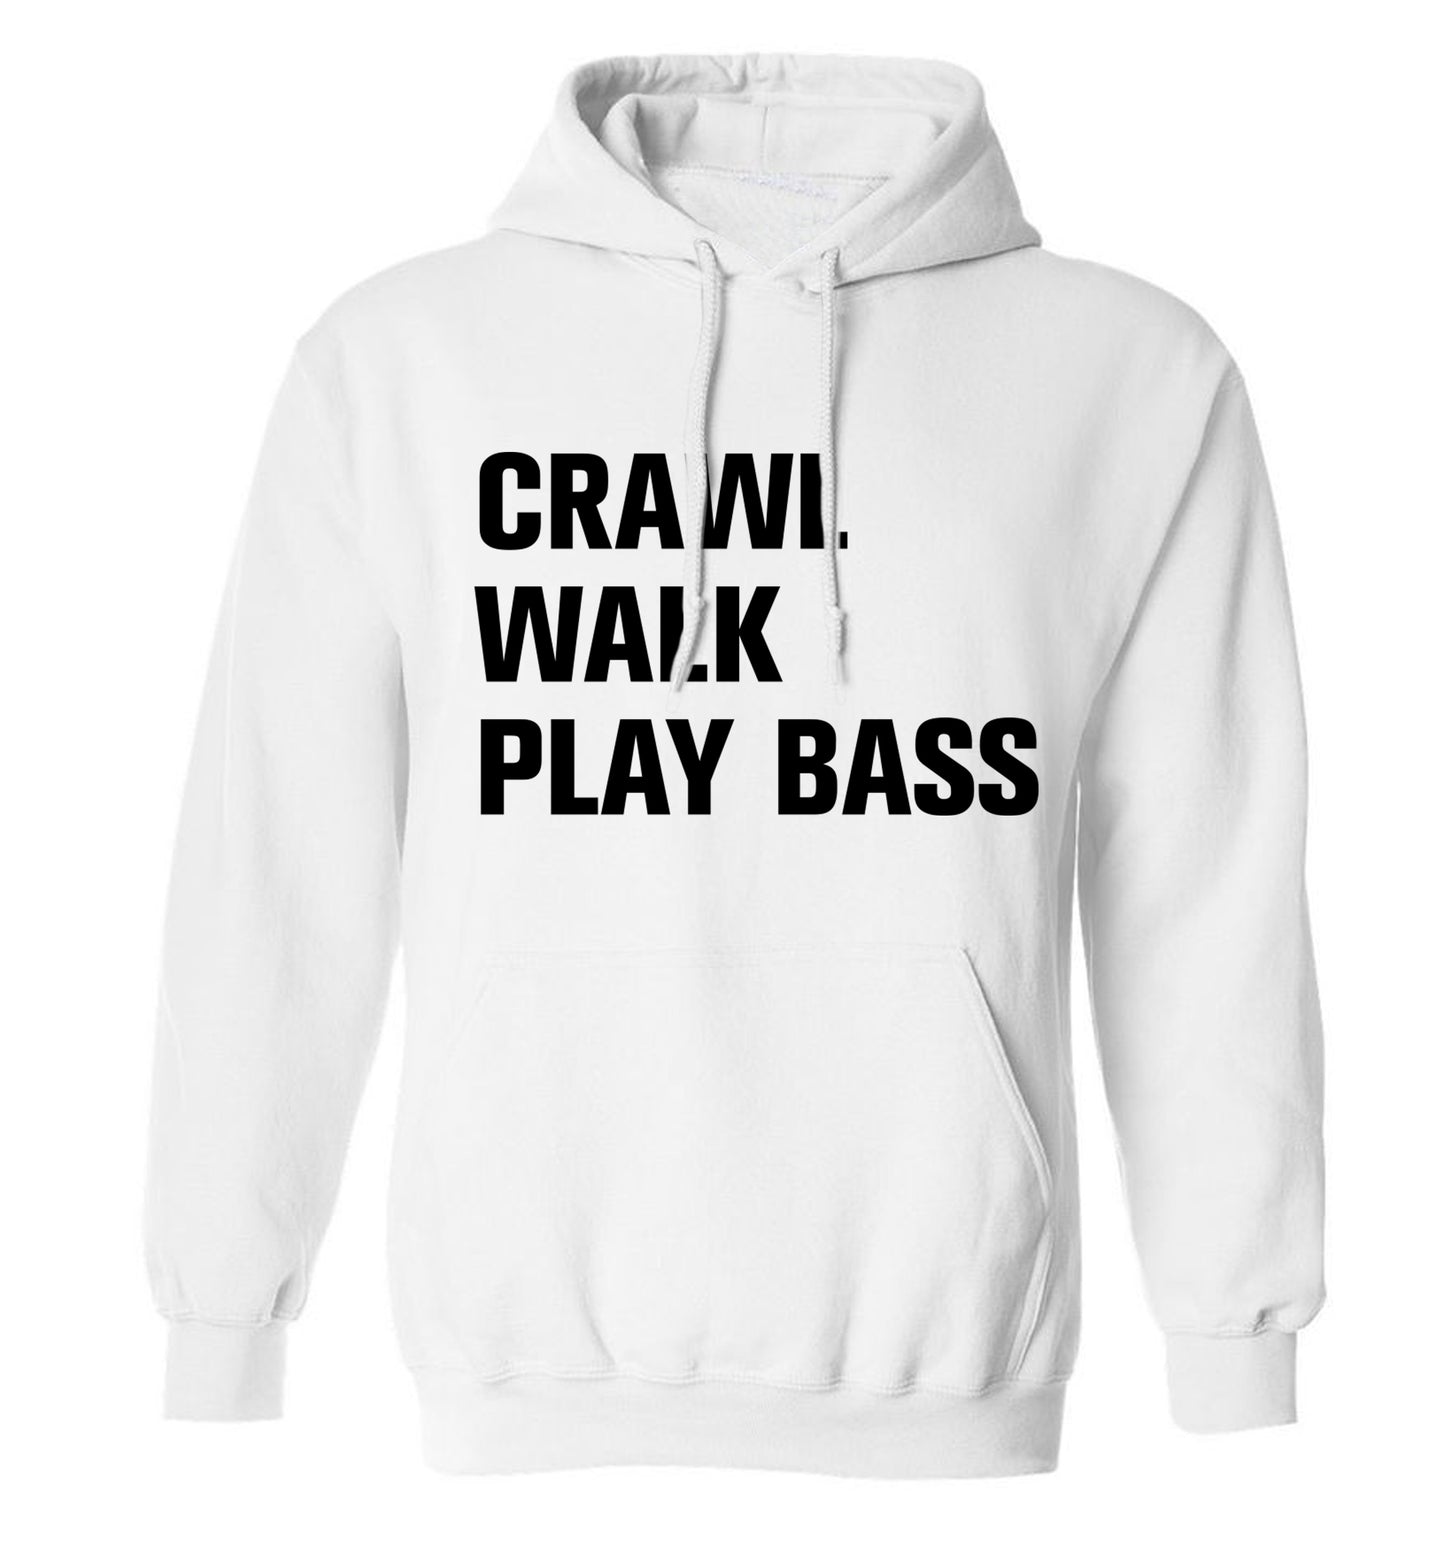 Crawl Walk Play Bass adults unisex white hoodie 2XL